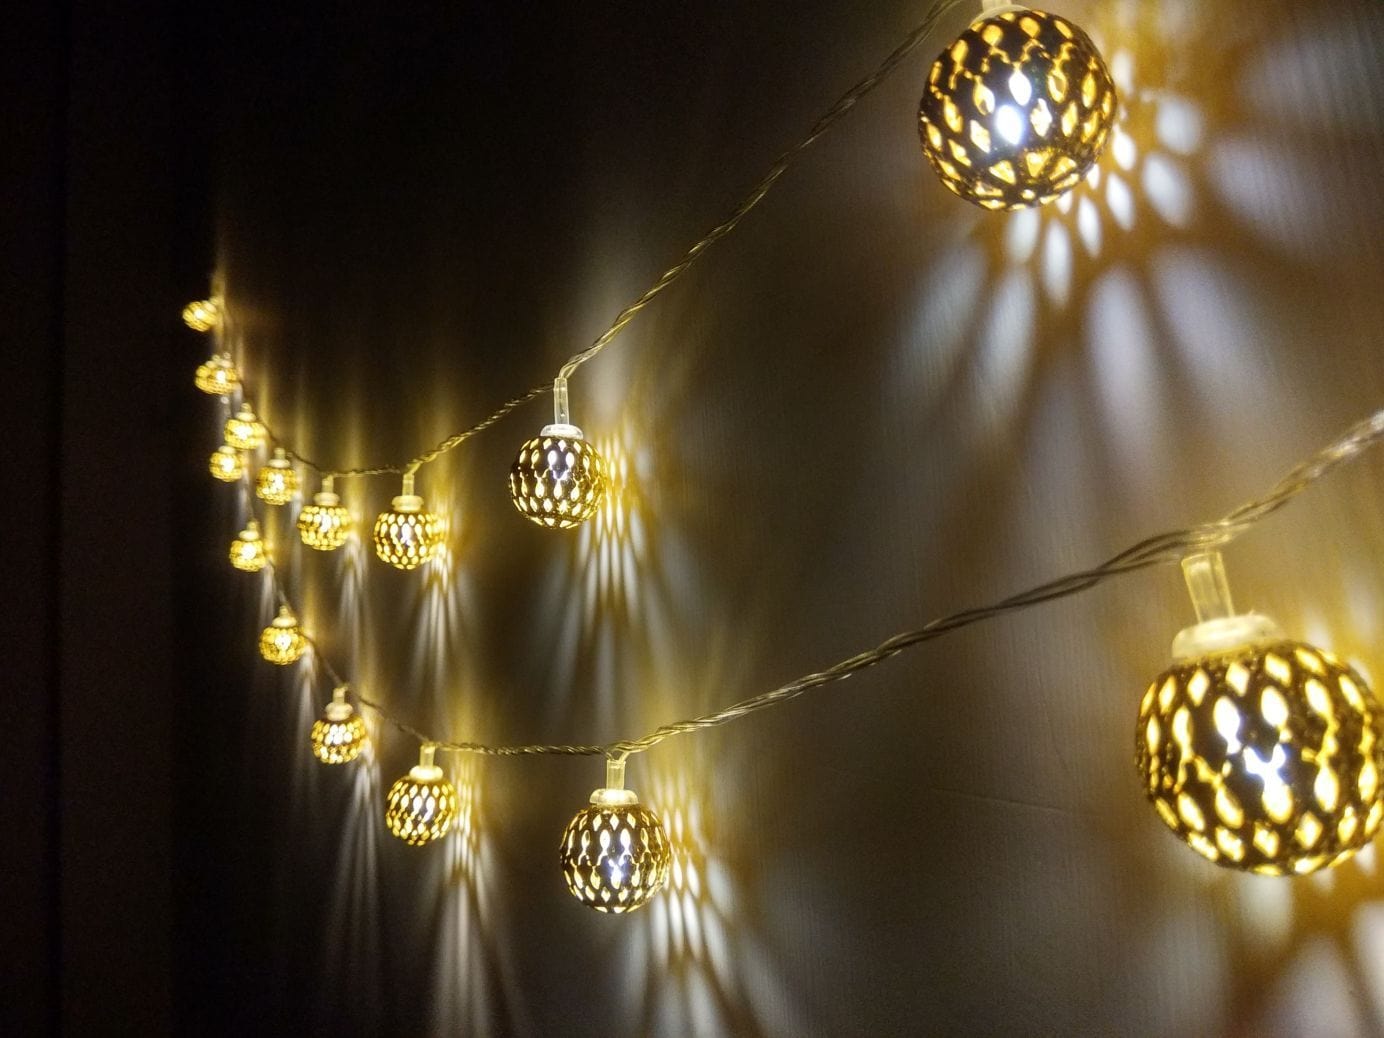 New Jaipur Handicraft Special Metal Round Light / Diwali Lights for Room Decoration - Lamansh